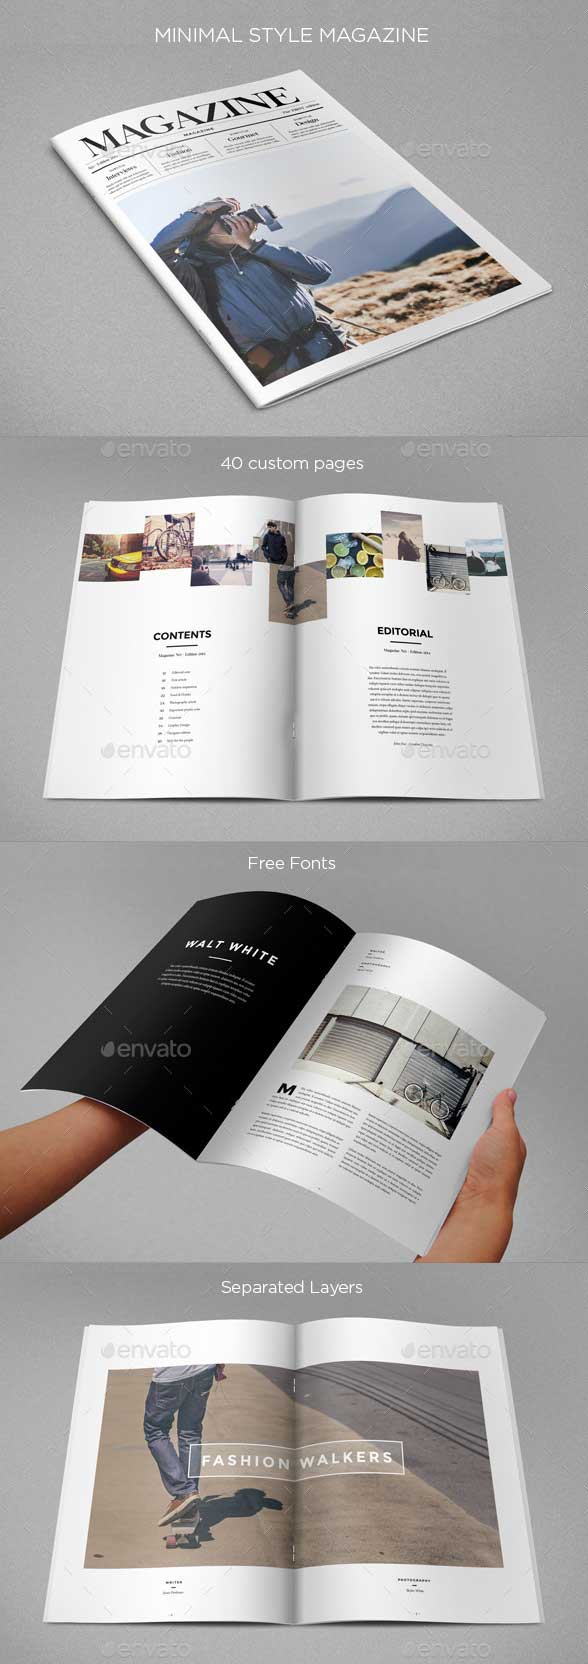 minimal-style-magazine-template